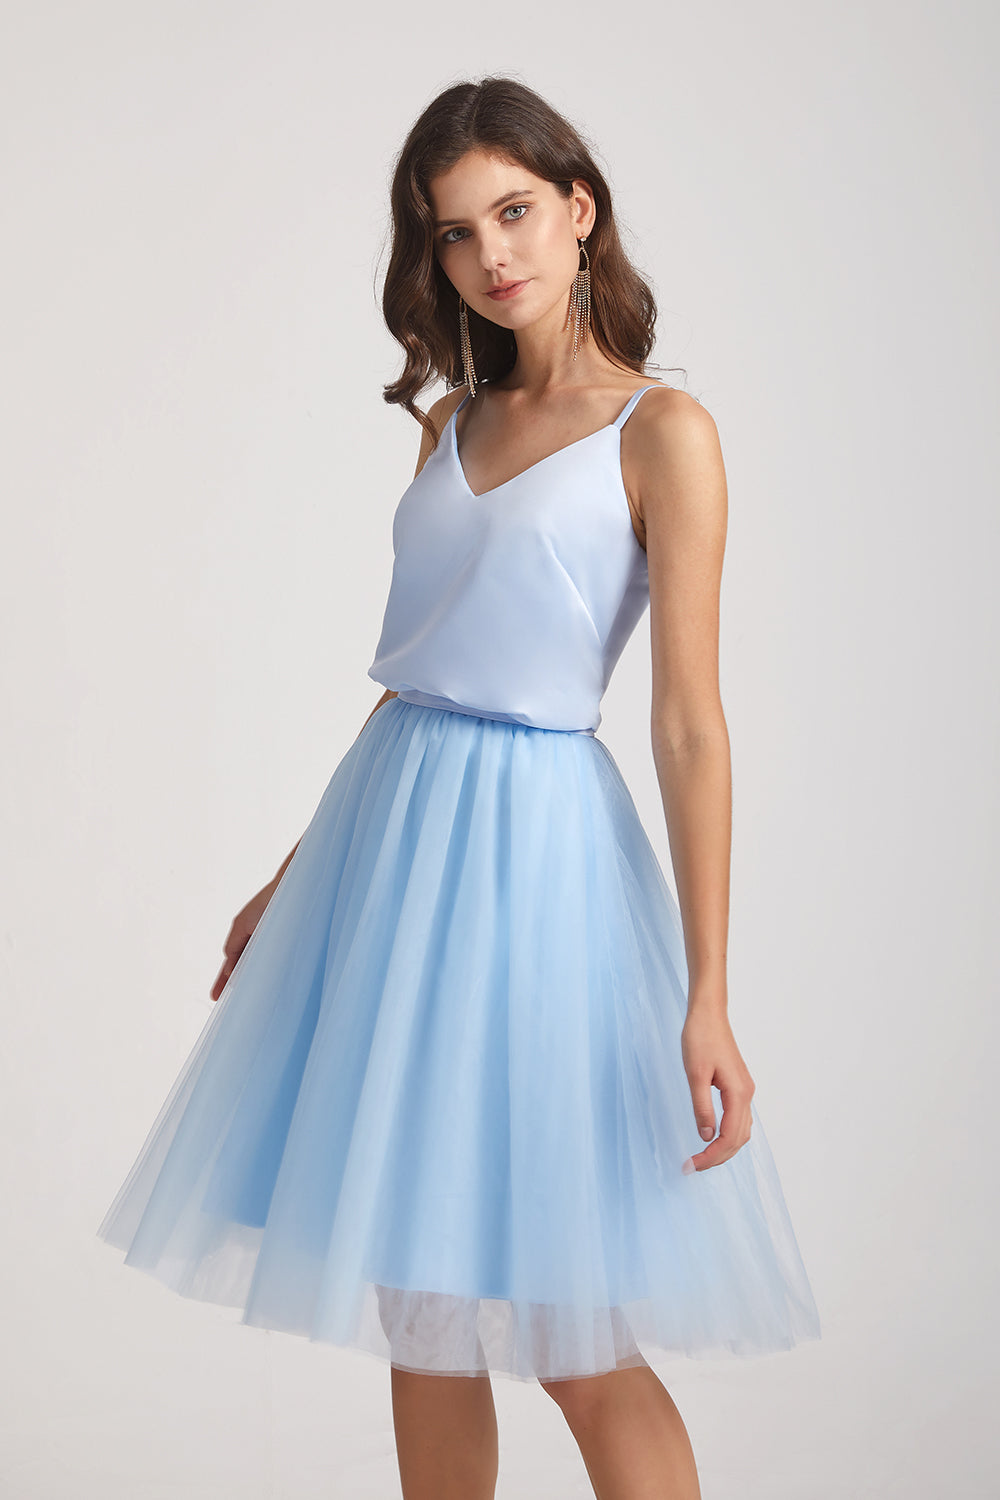 sleek  short bridesmaid gown